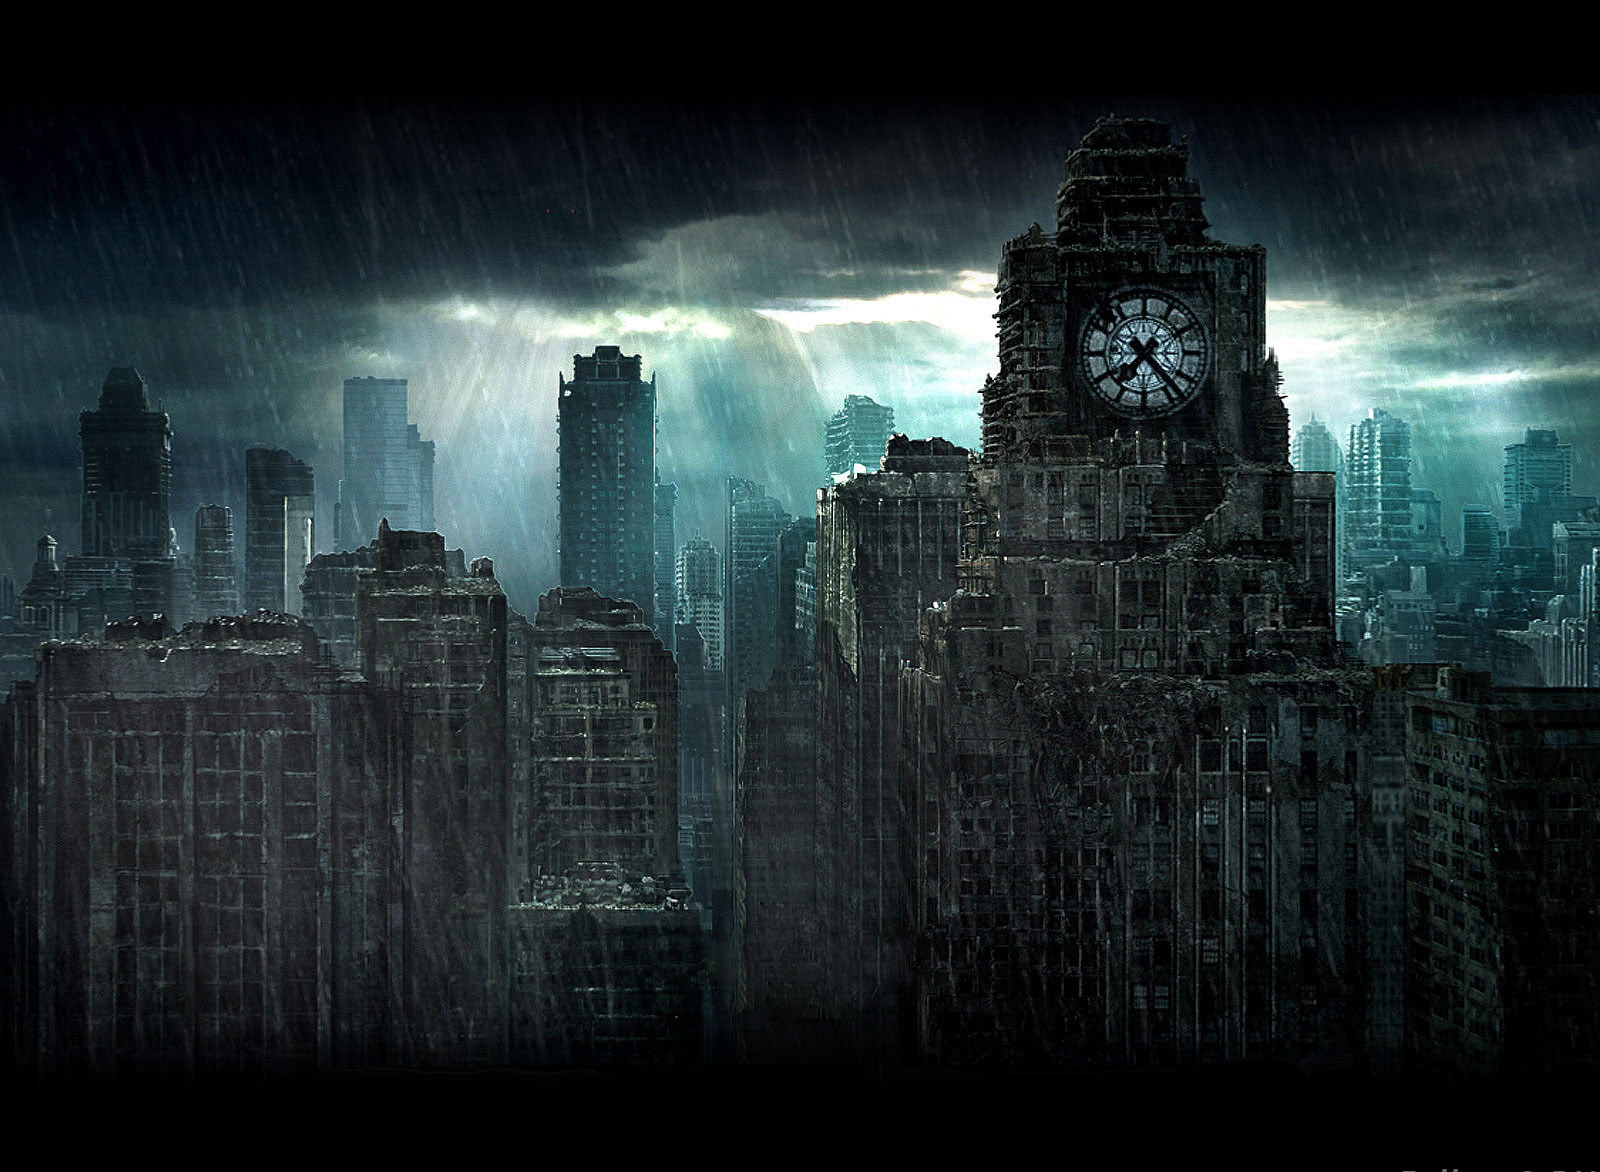 http://3.bp.blogspot.com/-wjiybscffz8/T5Qf9Dp8zFI/AAAAAAAAA1w/0xo2c7opOk4/s1600/dark-rainy-city.jpg